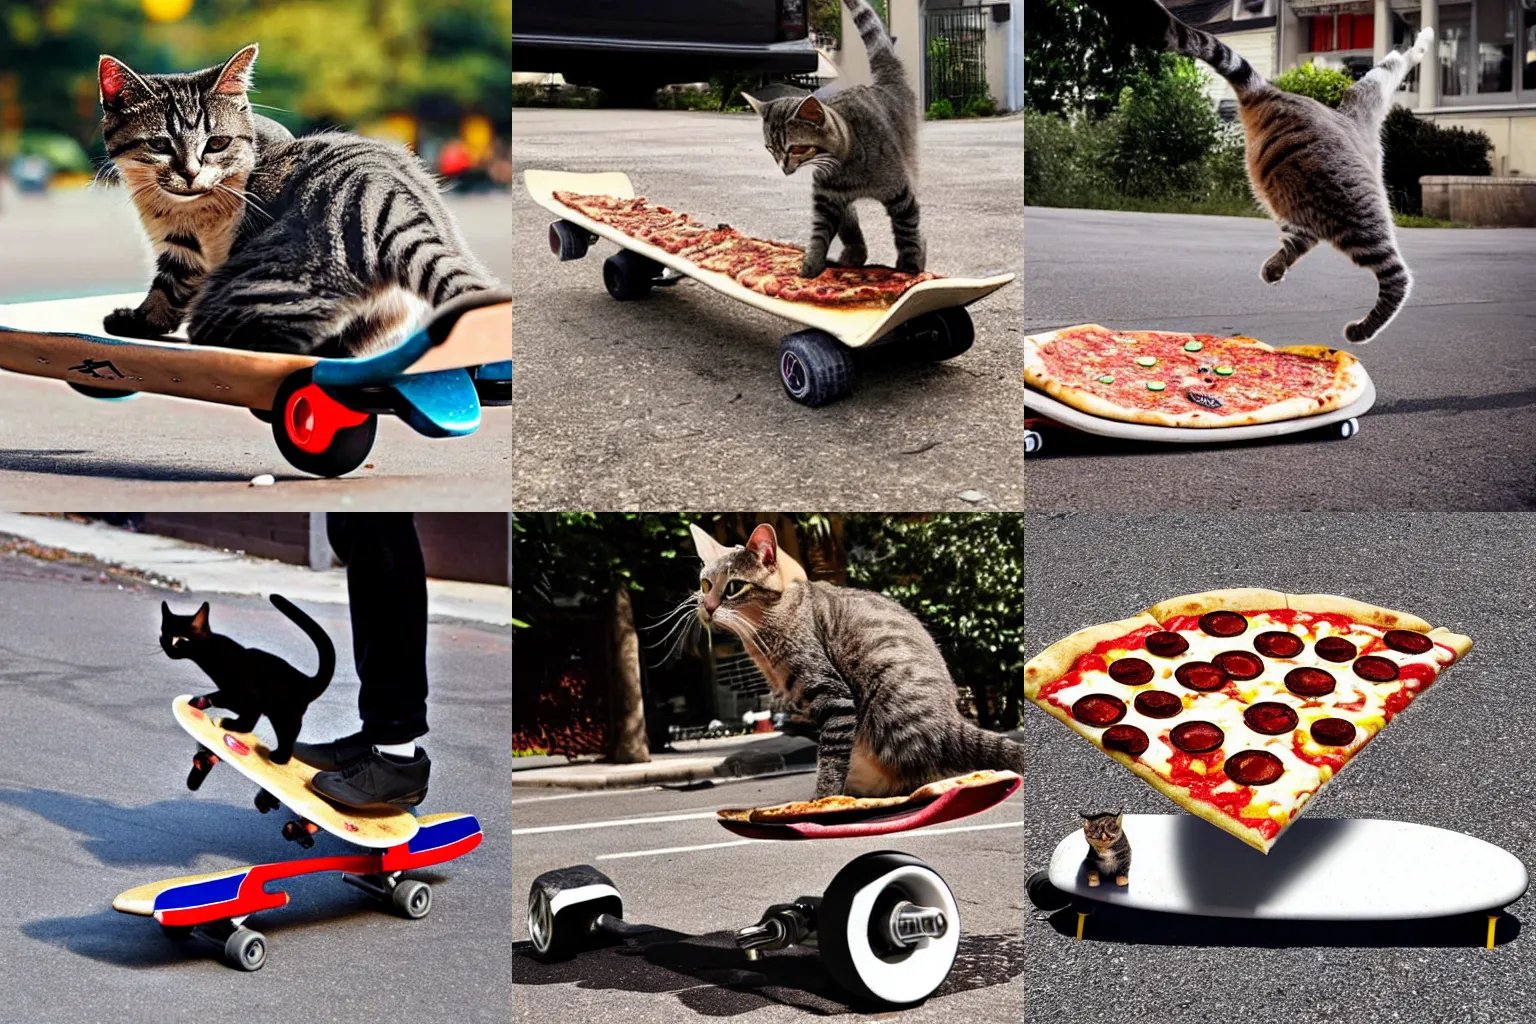 Prompt: a cat doing a kickflip on a pizza skateboard.